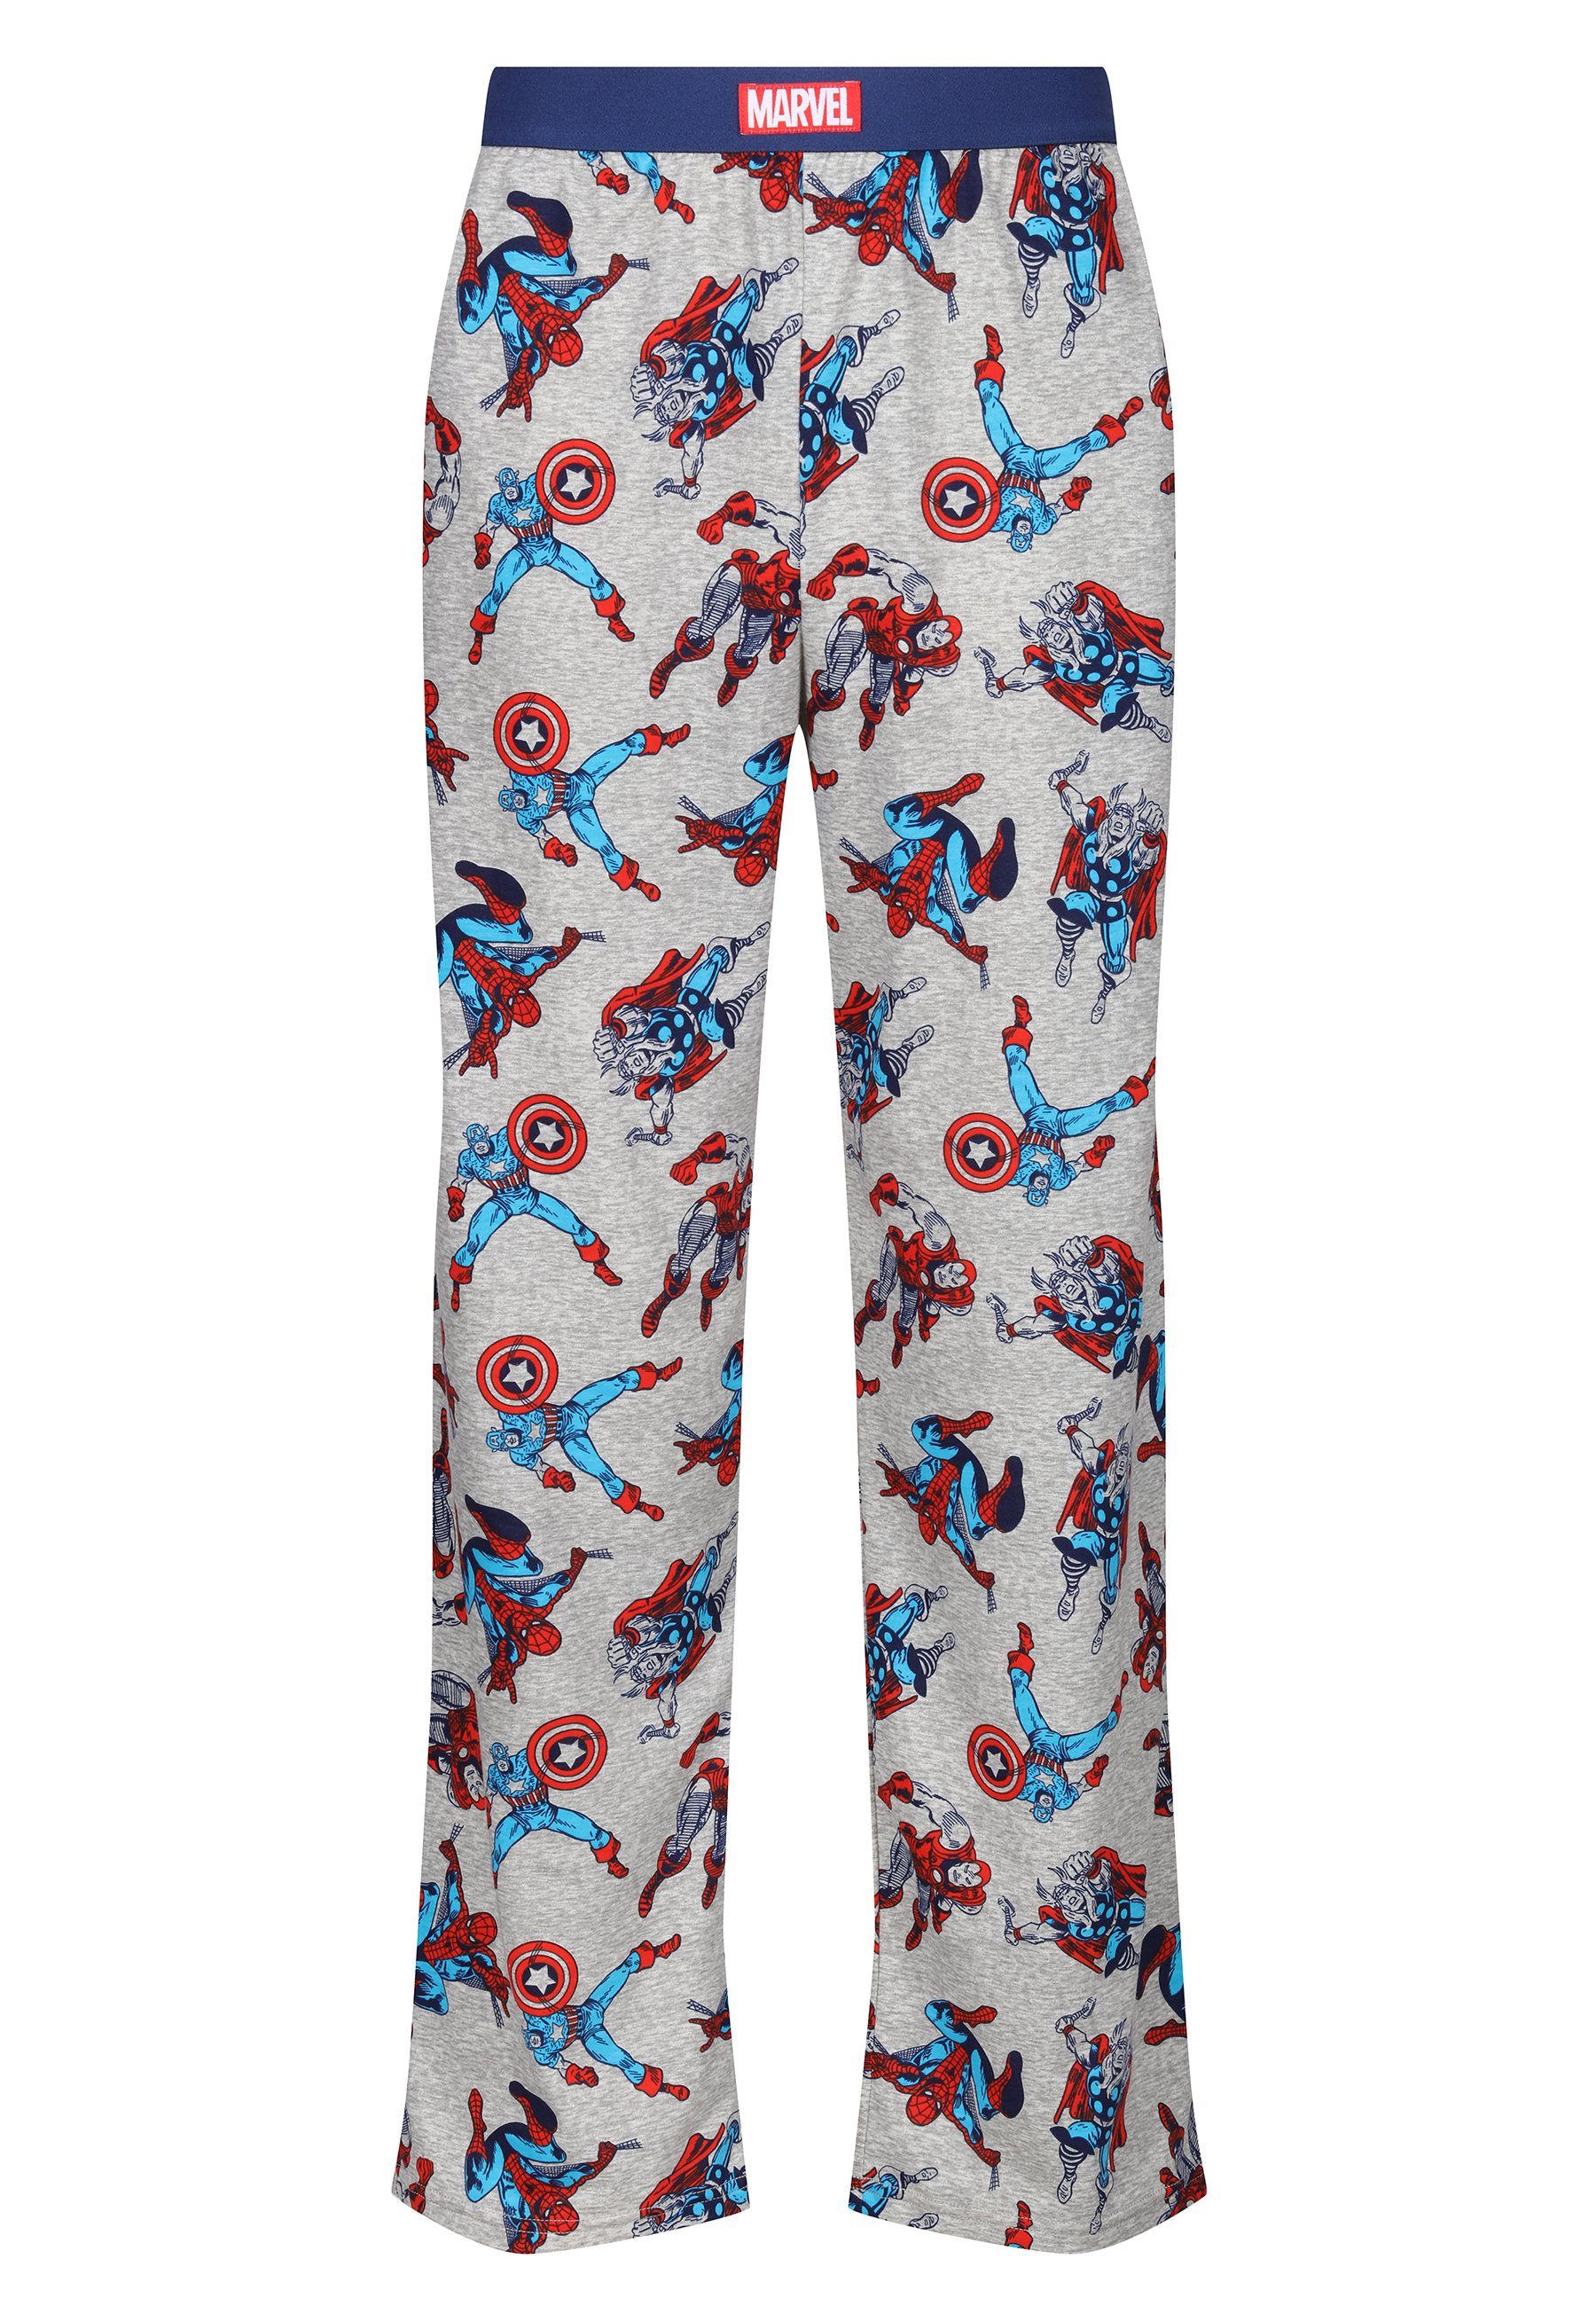 Recovered Loungepants Loungepants - Marvel Comics Heroes (Spiderman, Iron Man, Thor) - grey